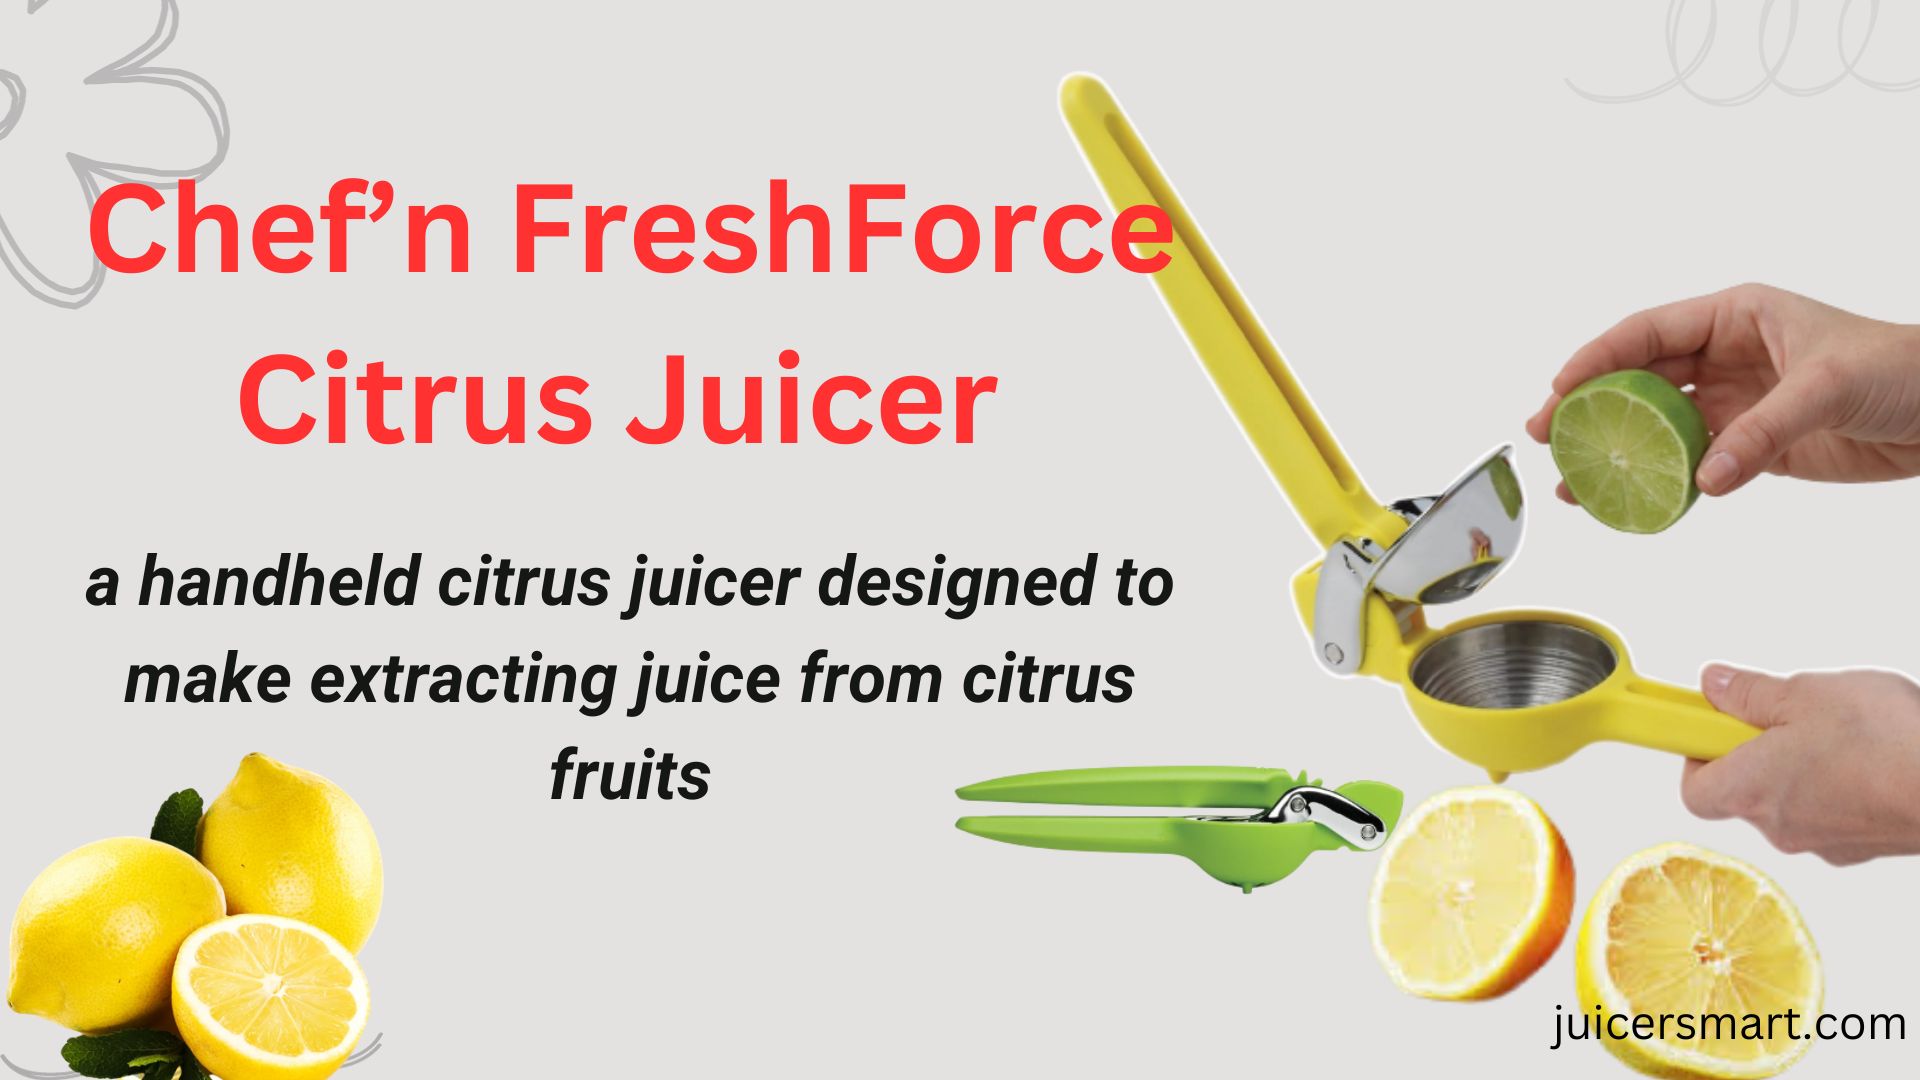 Chef’n FreshForce Citrus Juicer